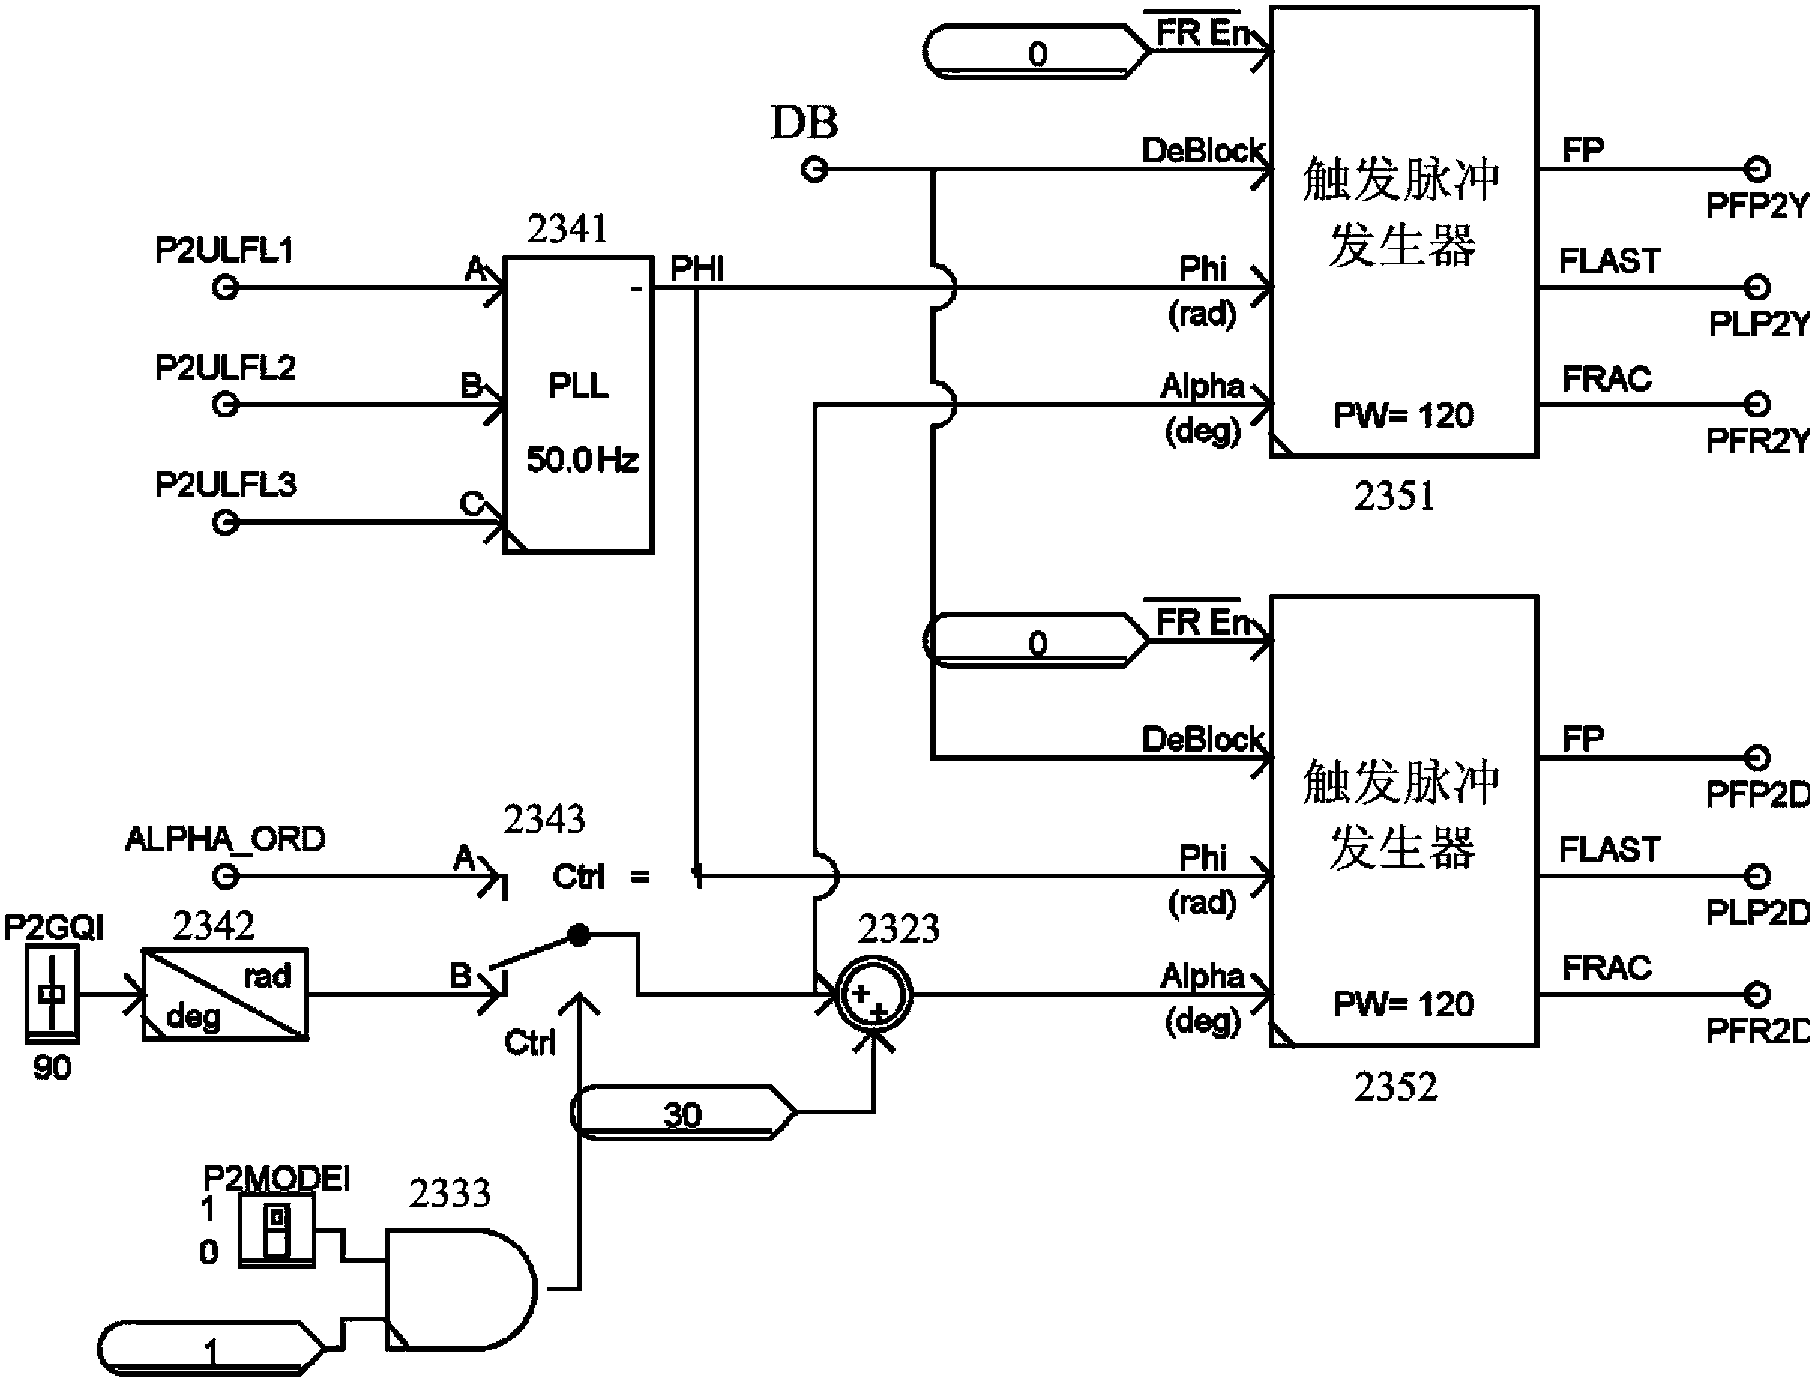 Ignition pulse generator simulating device